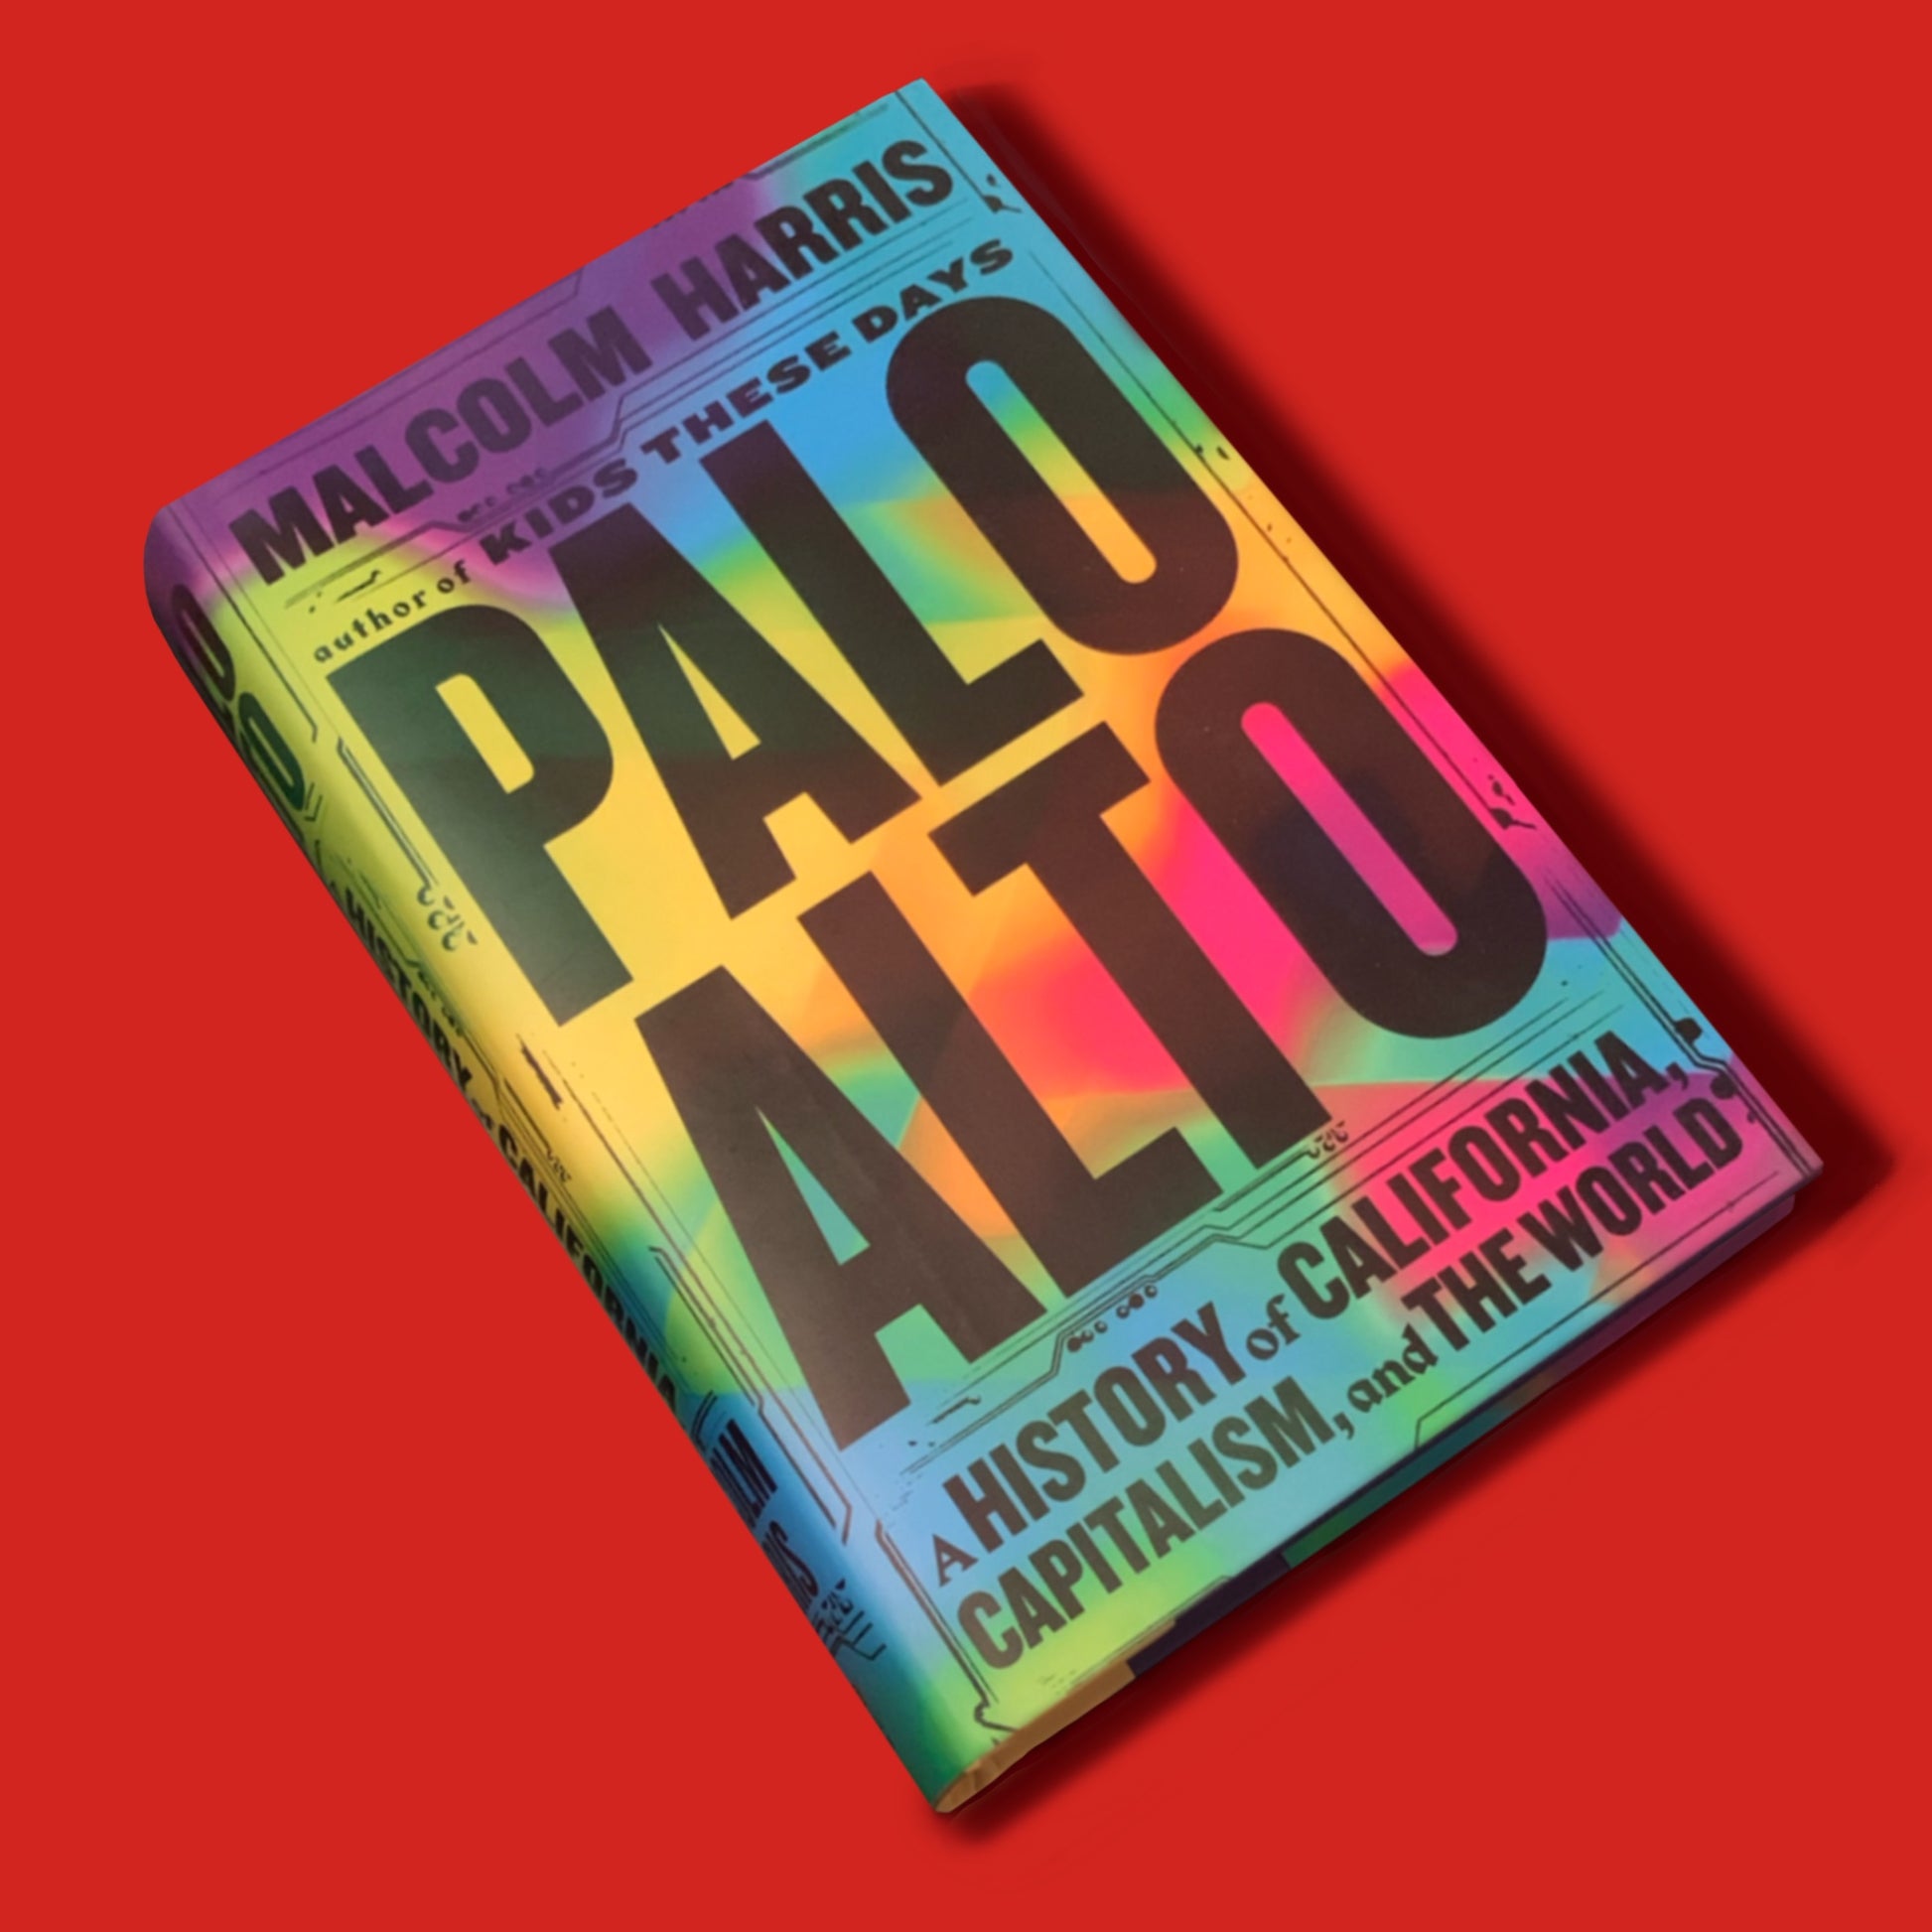 Palo Alto History